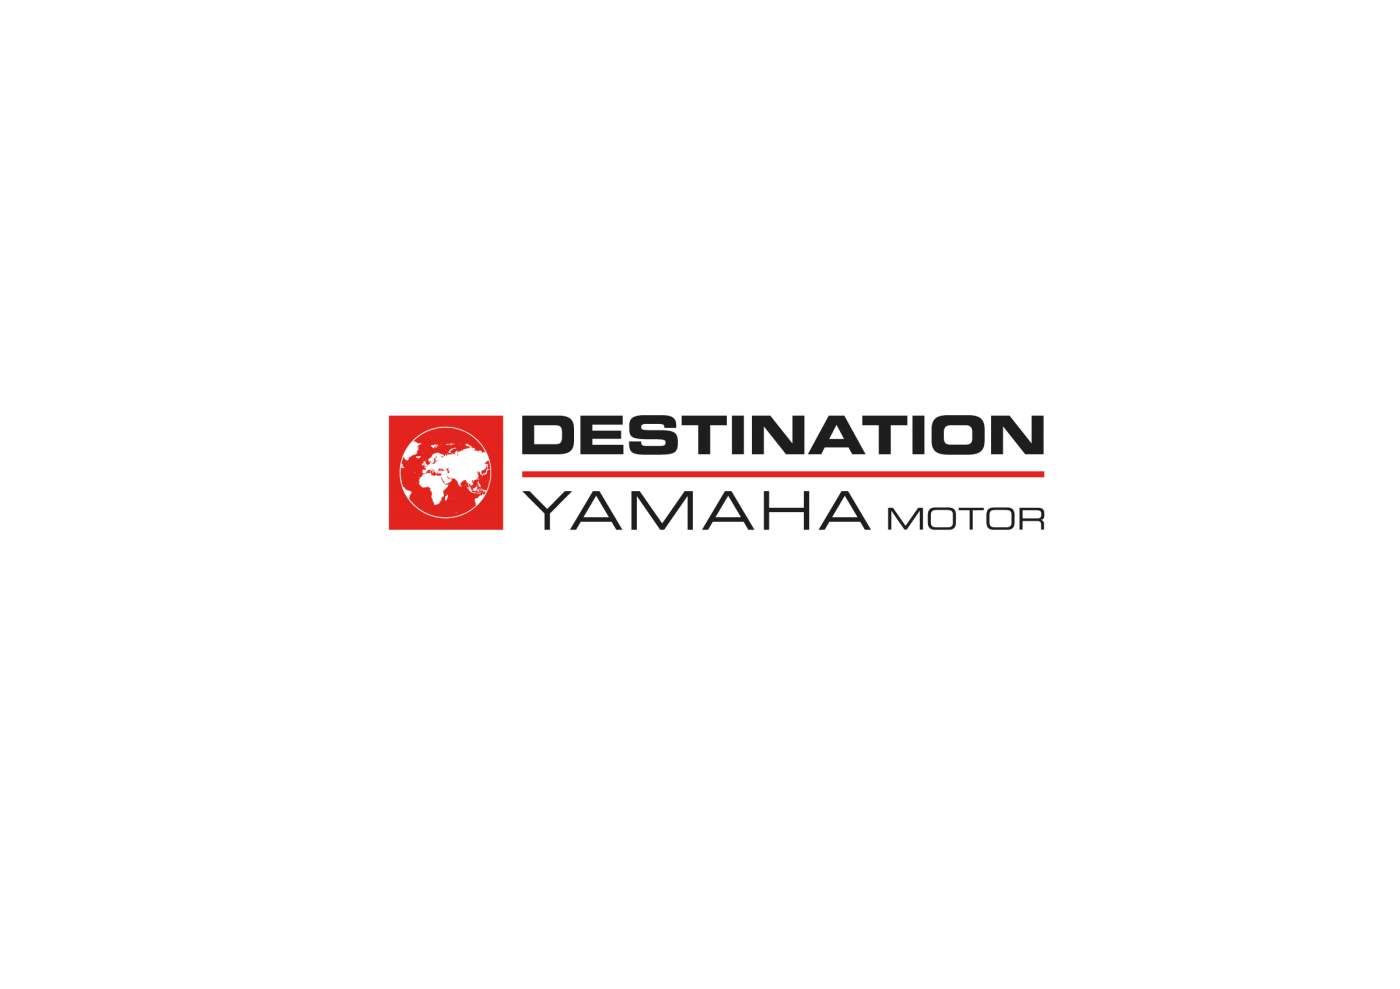 https://www.yamaha-motor.eu/de/de/news/destination-yamaha-motor-2021/#/